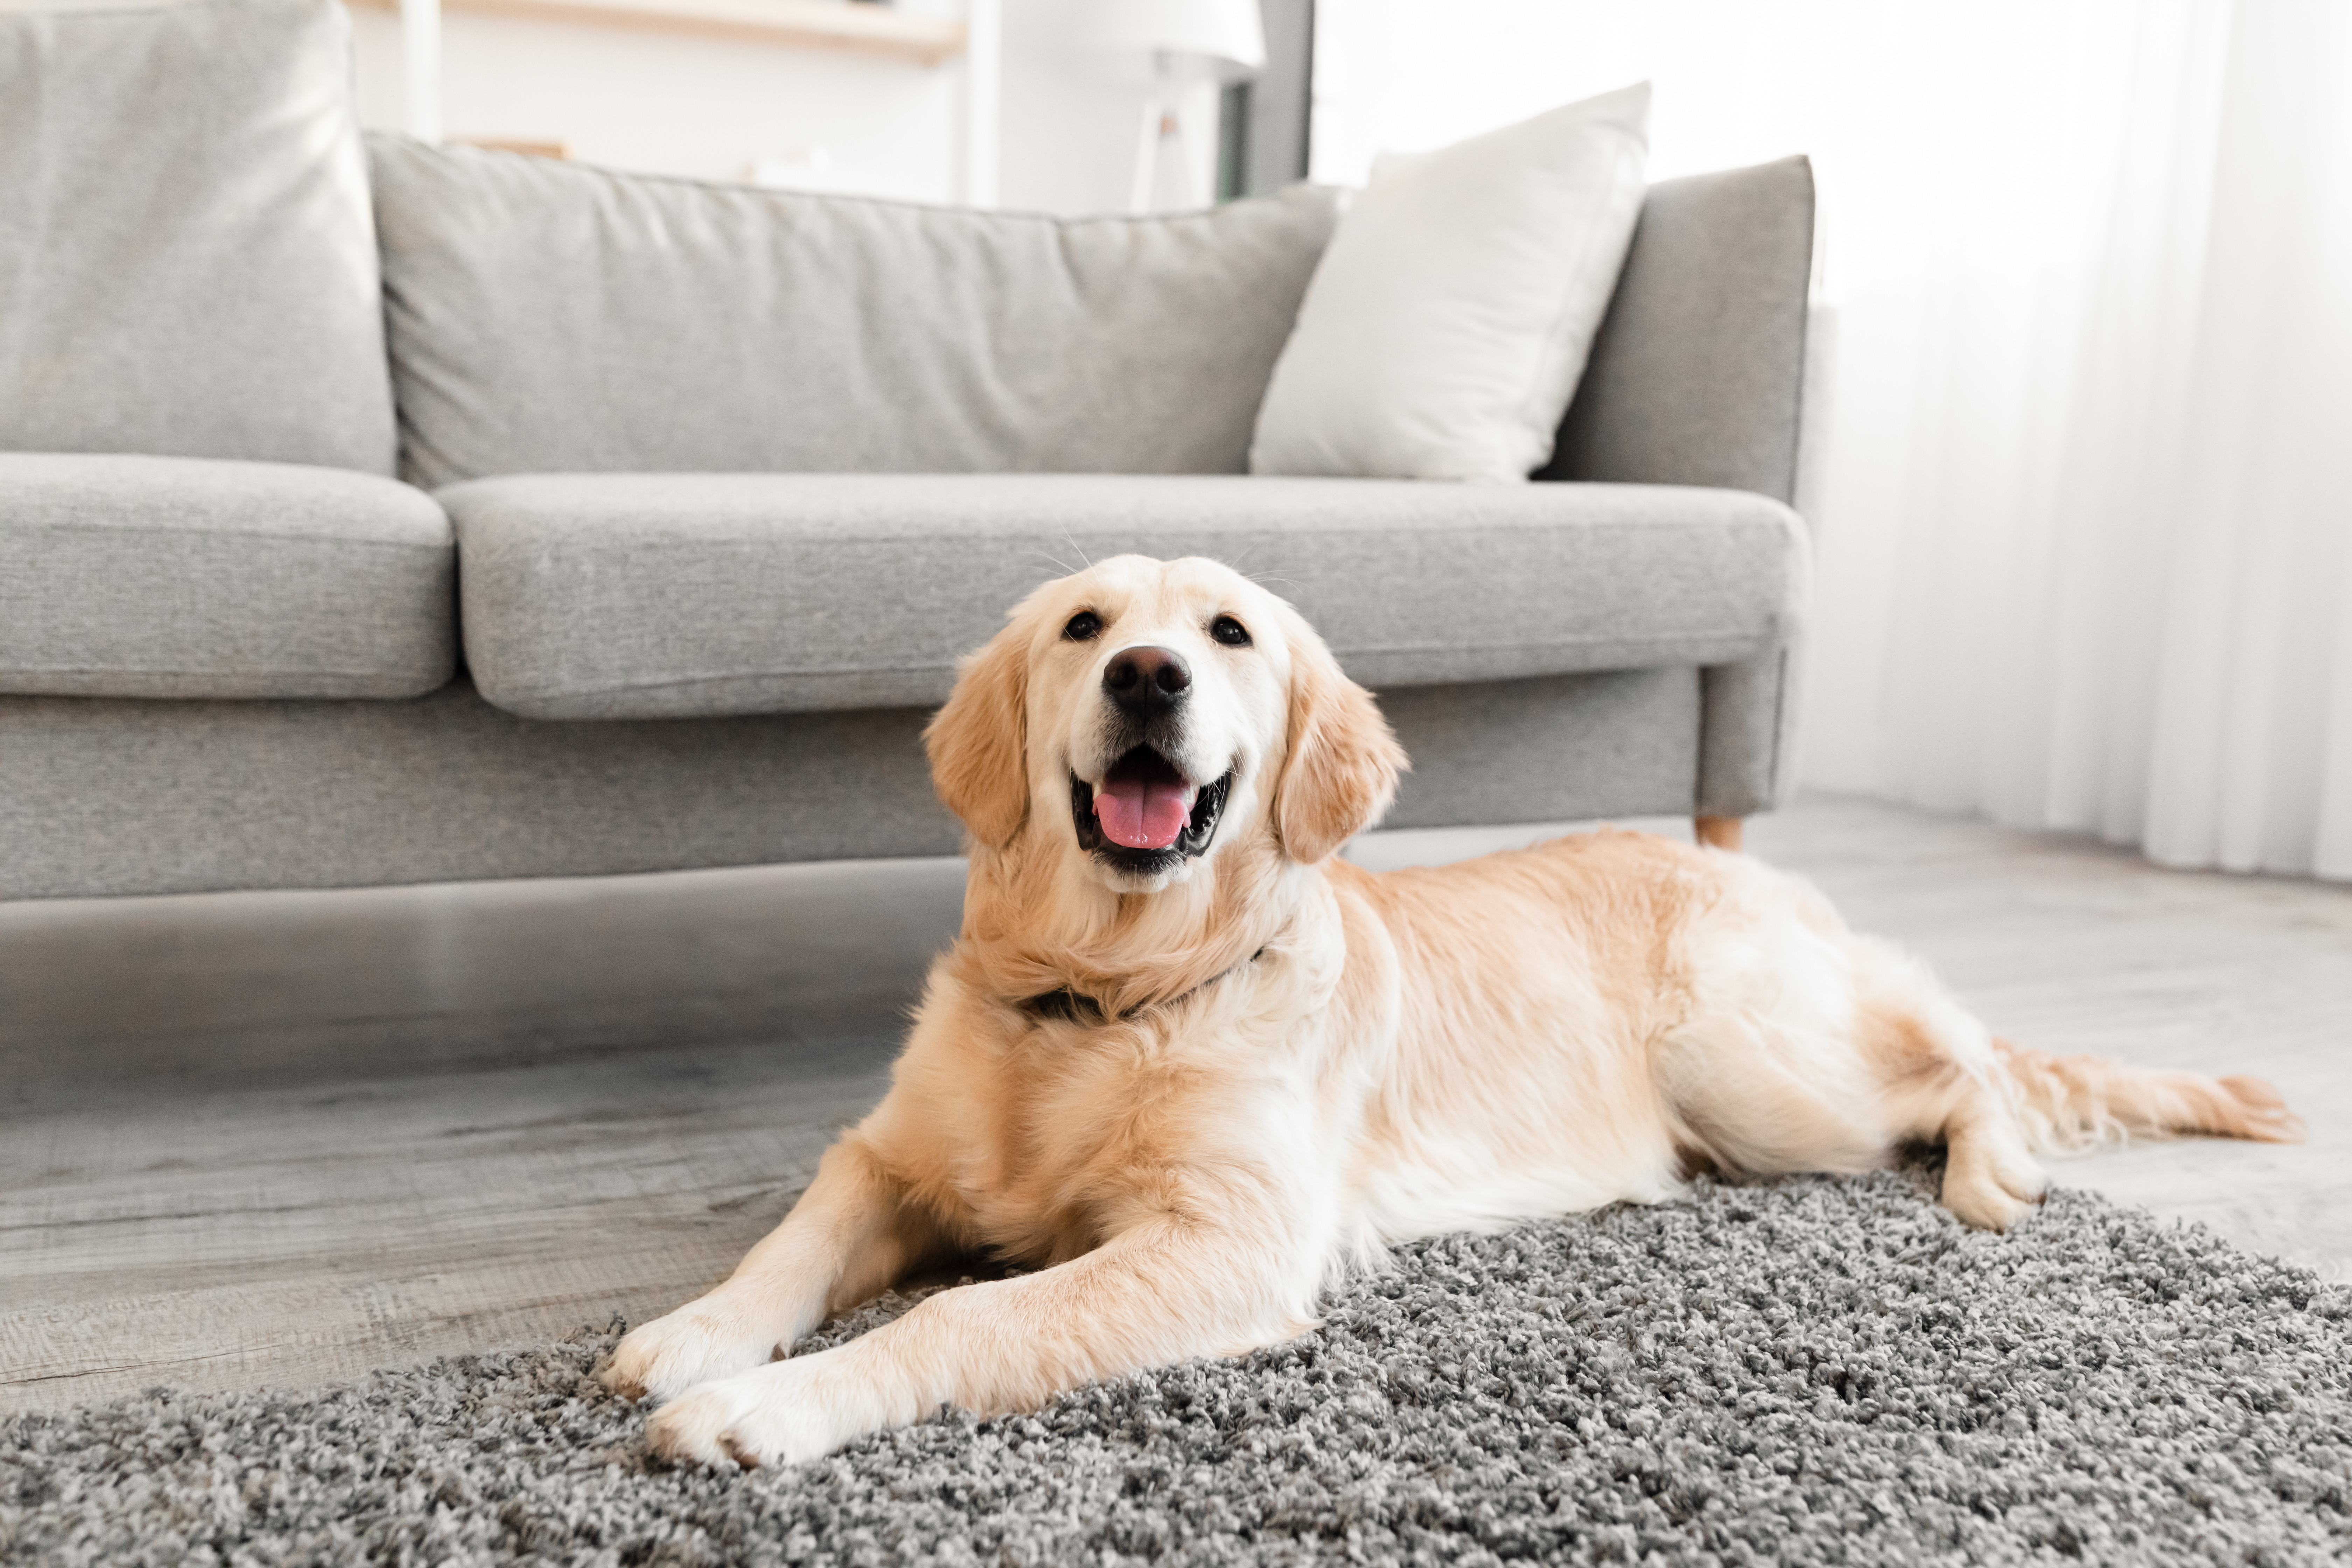 Cute Golden Retriever dog lying on carpet at home